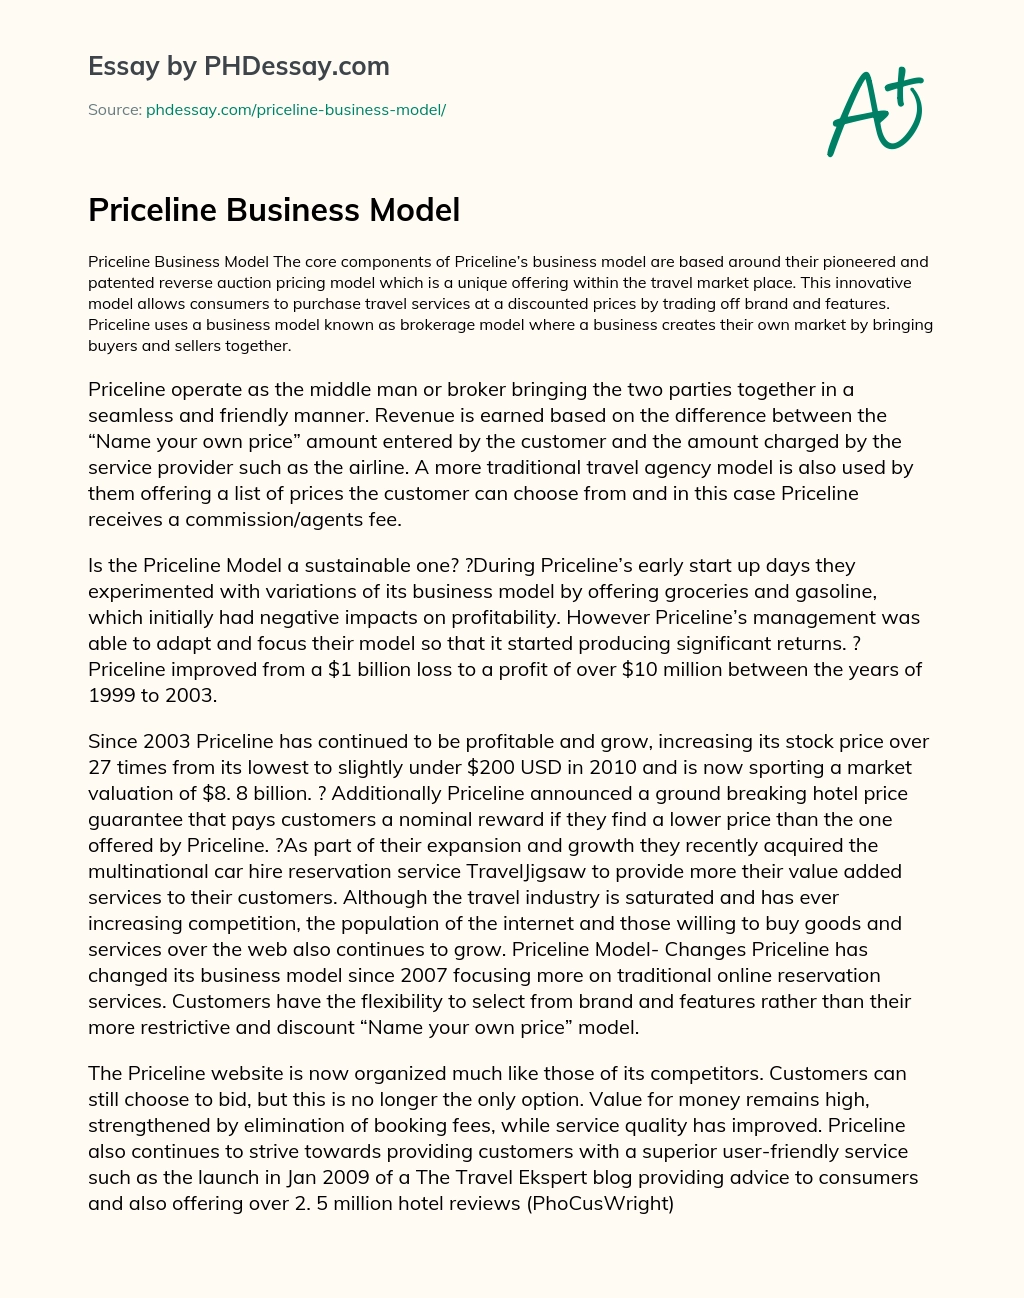 Priceline Business Model essay